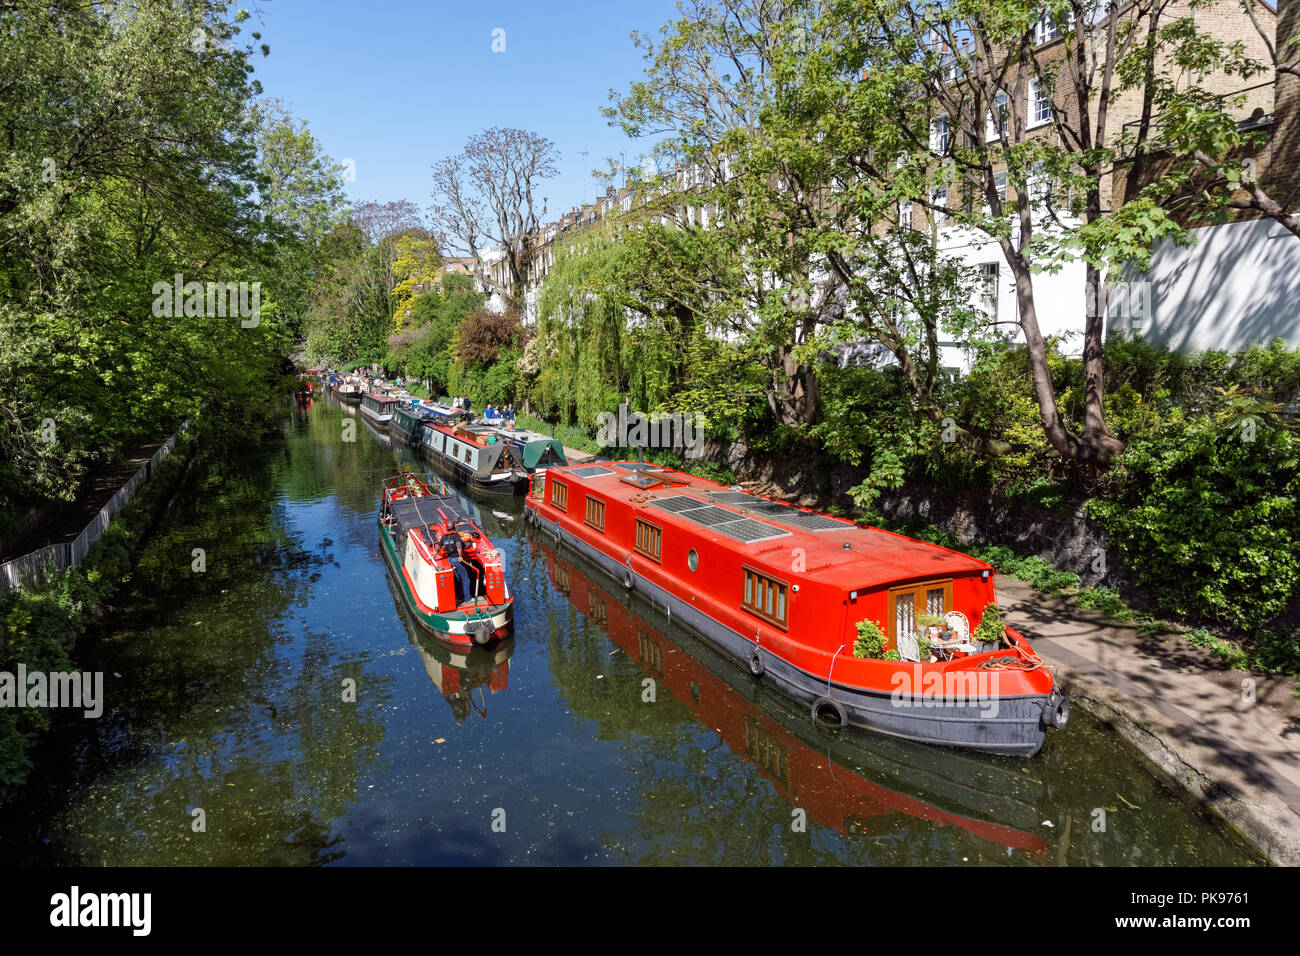 Houseboats and narrowboats on the Regent's Canal in Islington, London England United Kingdom UK Stock Photo